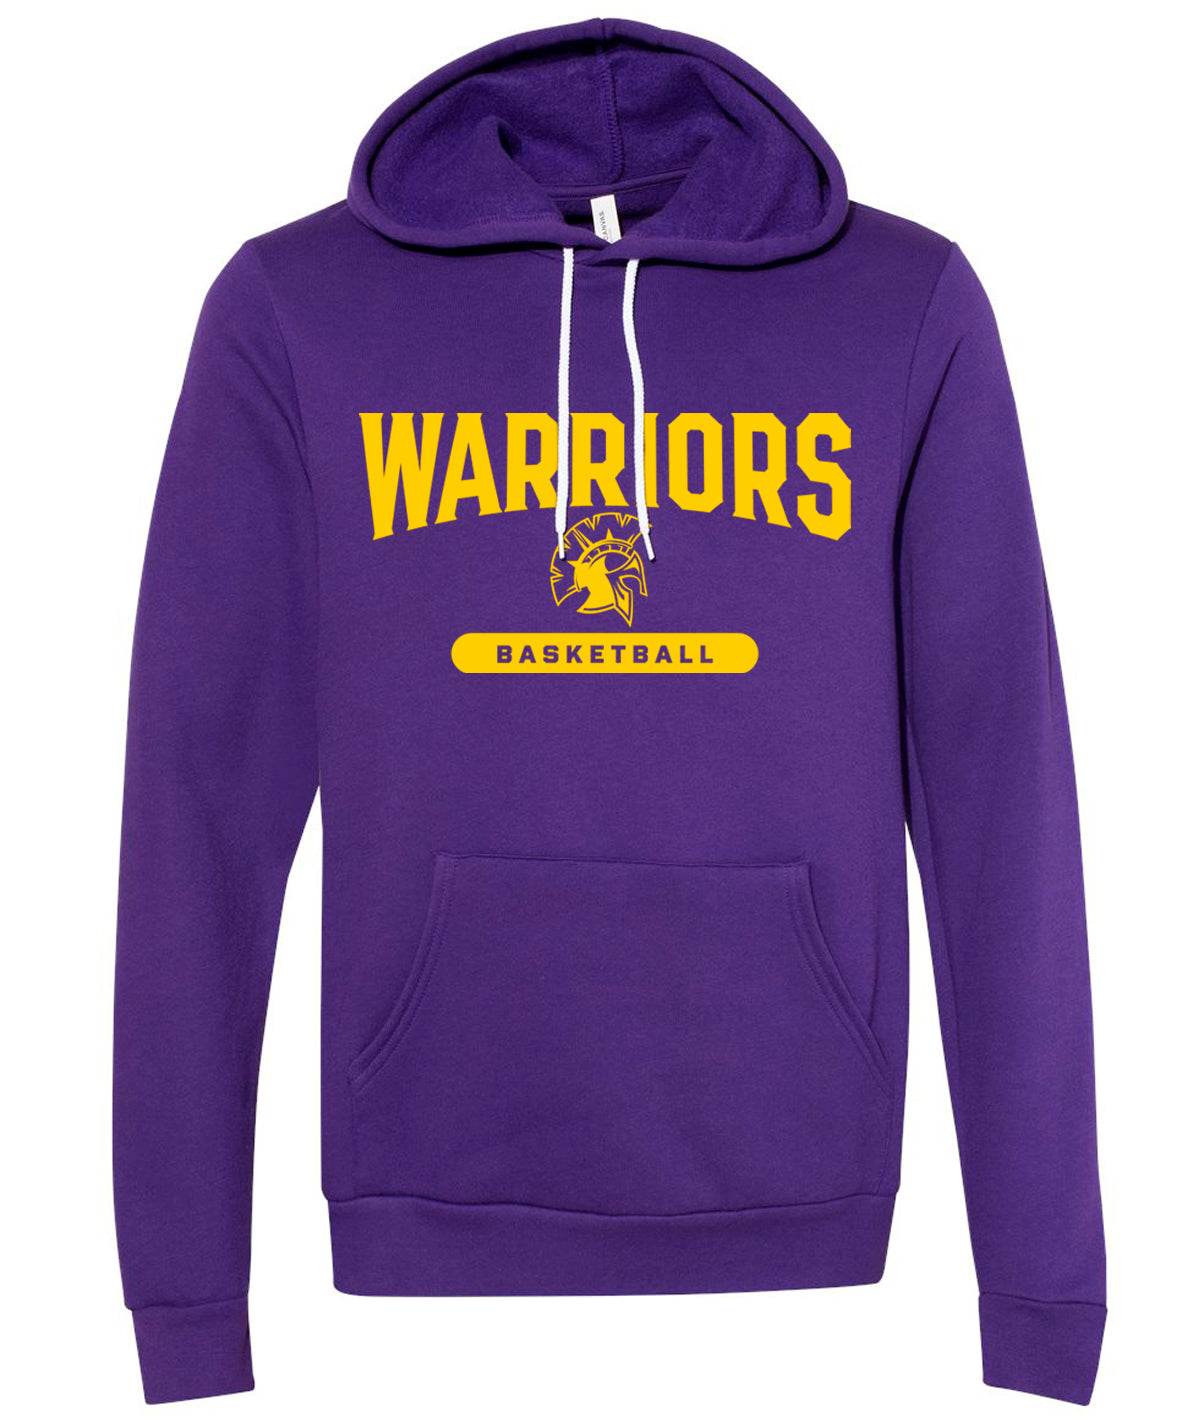 warriors basketball jacket